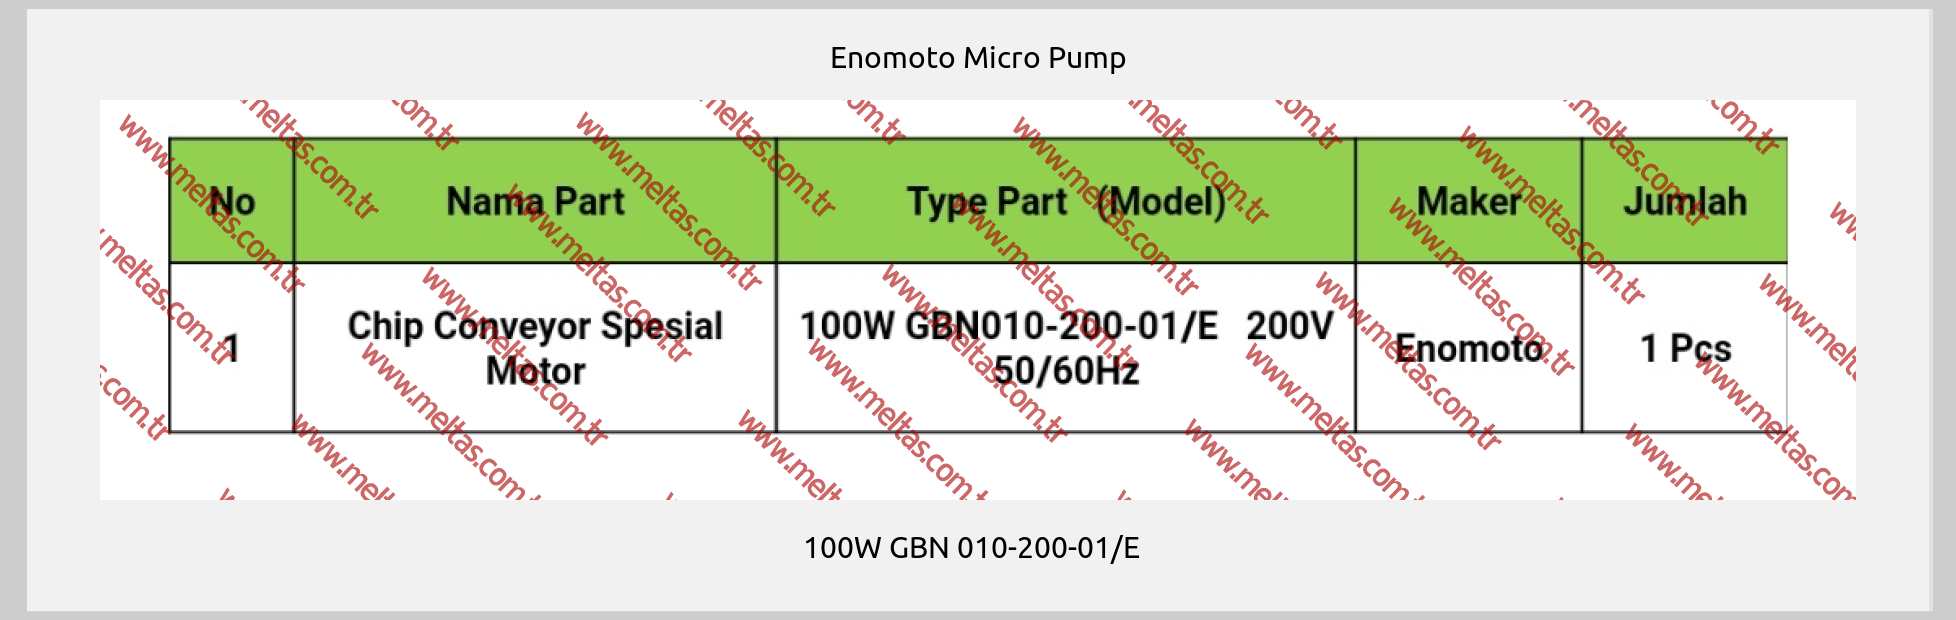 Enomoto Micro Pump-100W GBN 010-200-01/E  